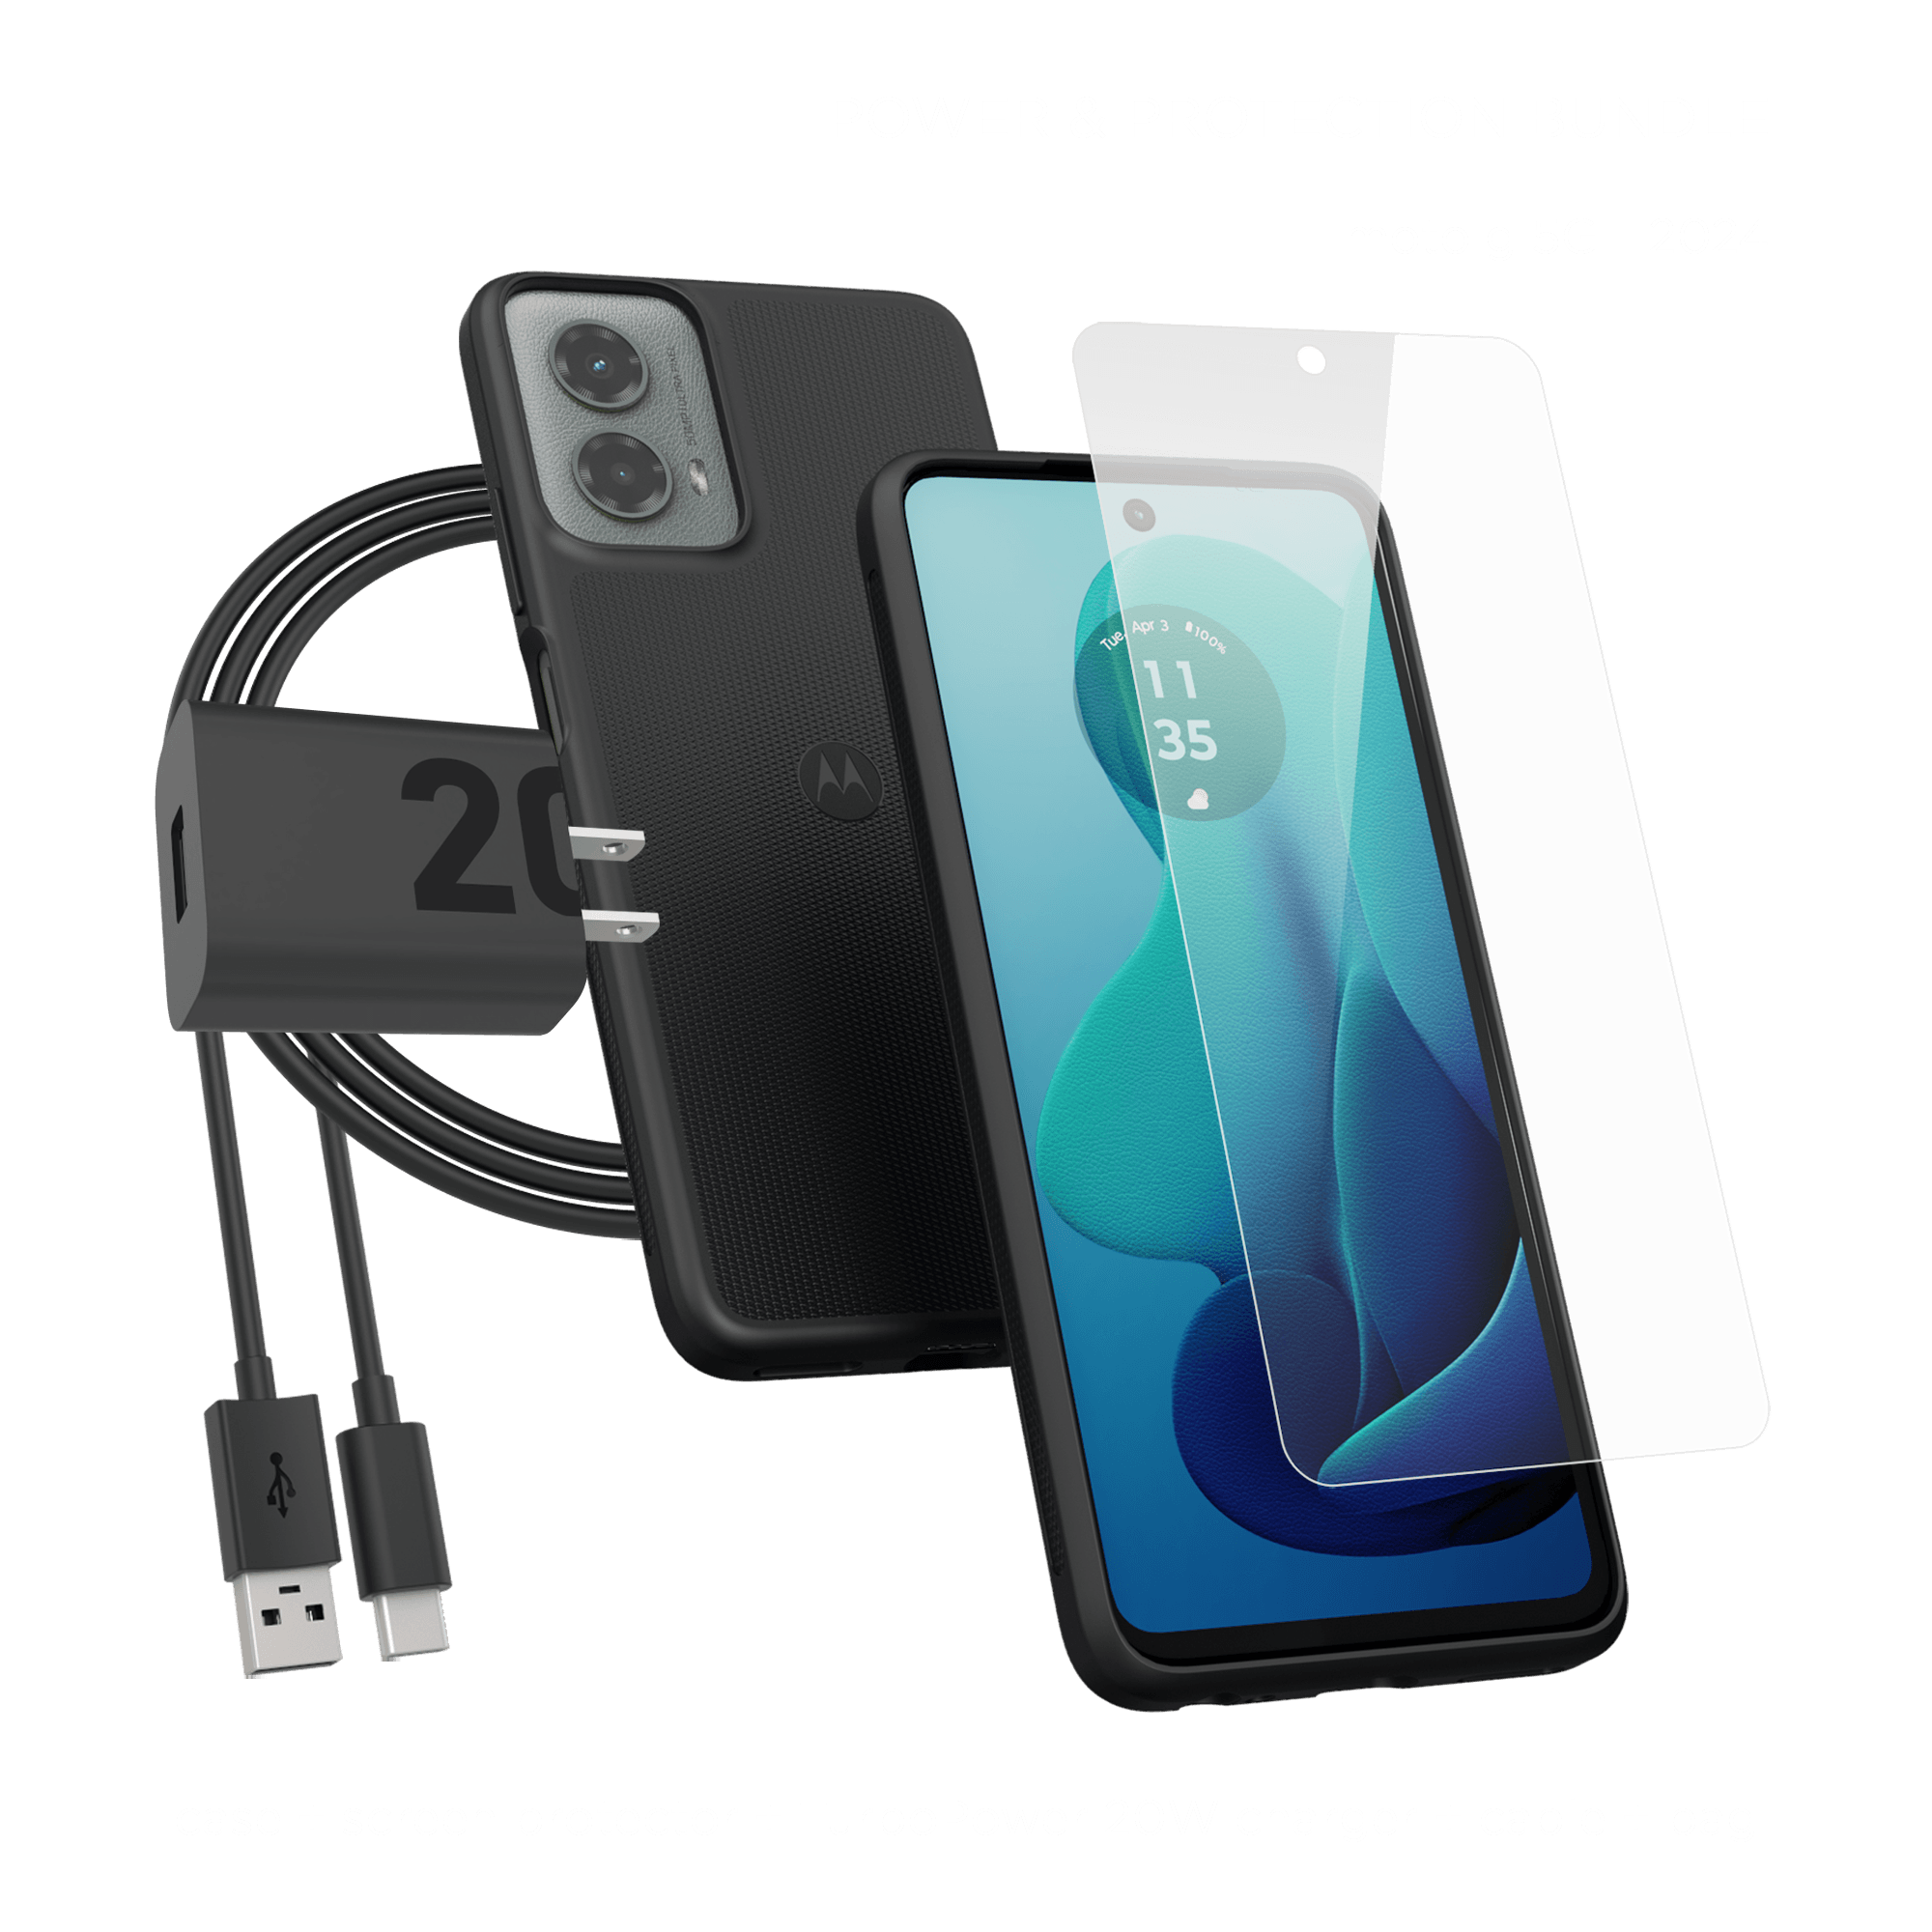 Moto G 5G 2024 Power & Protection Bundle